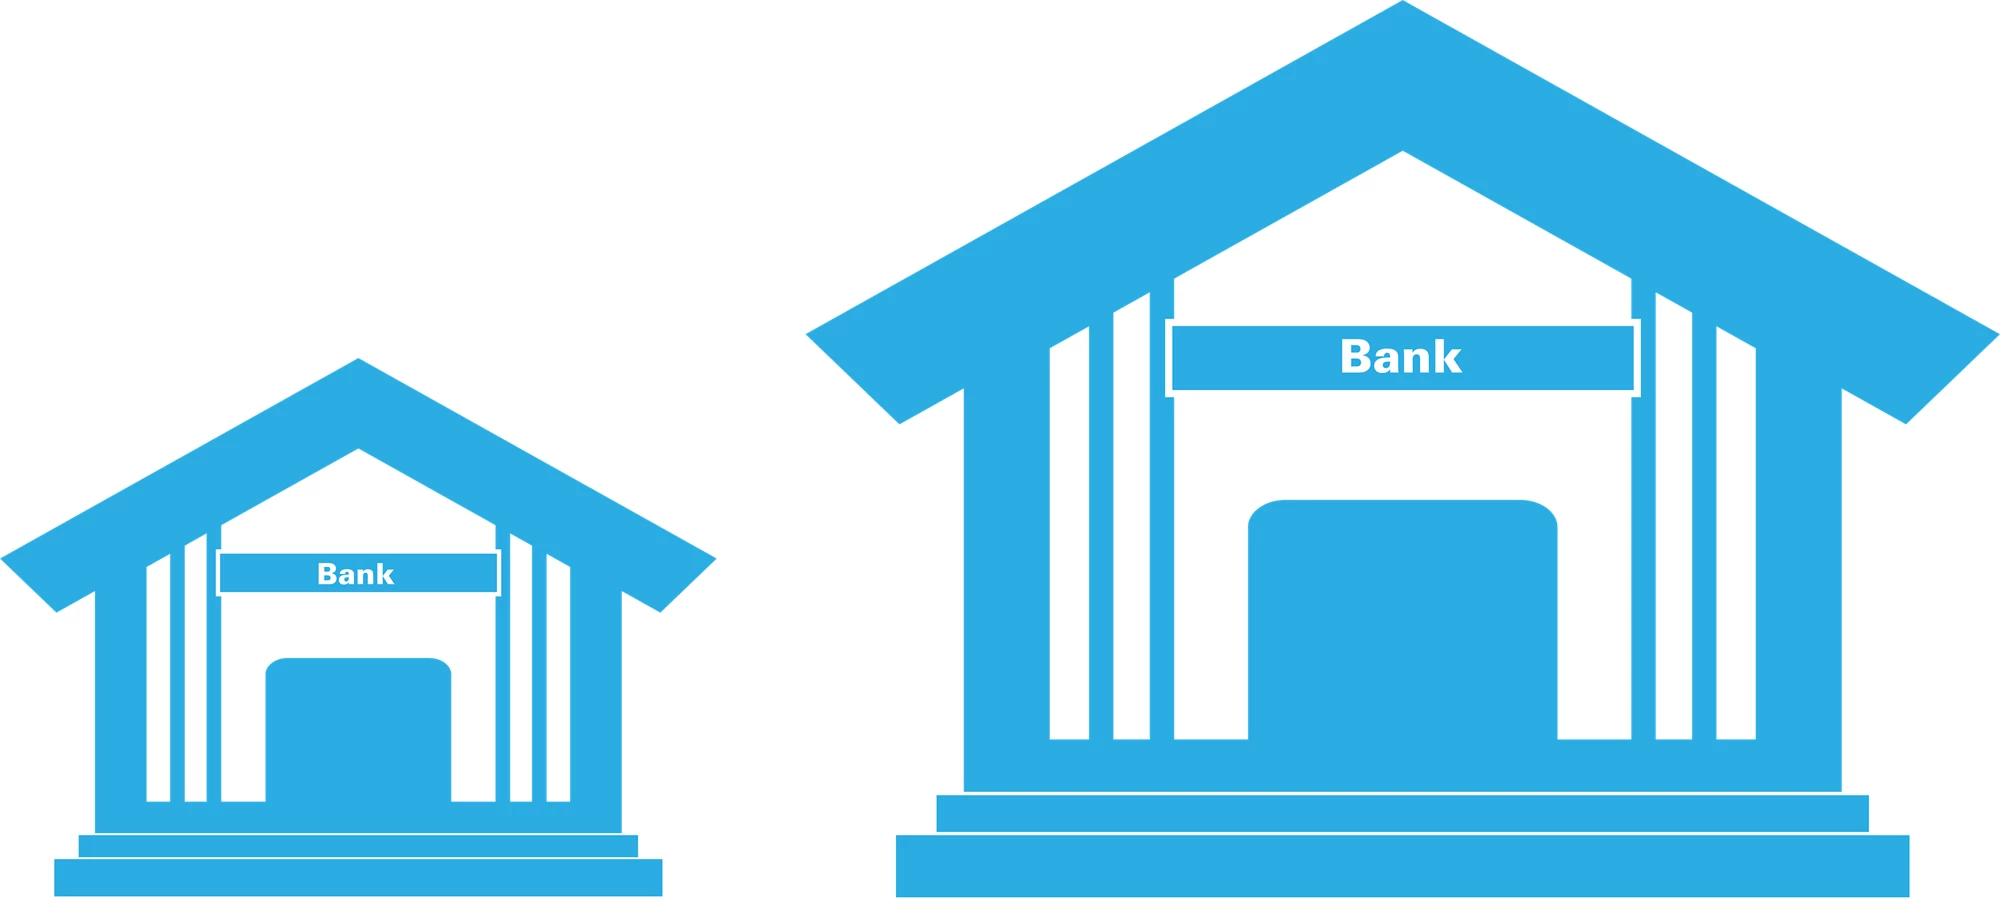 Small bank, big bank concept.